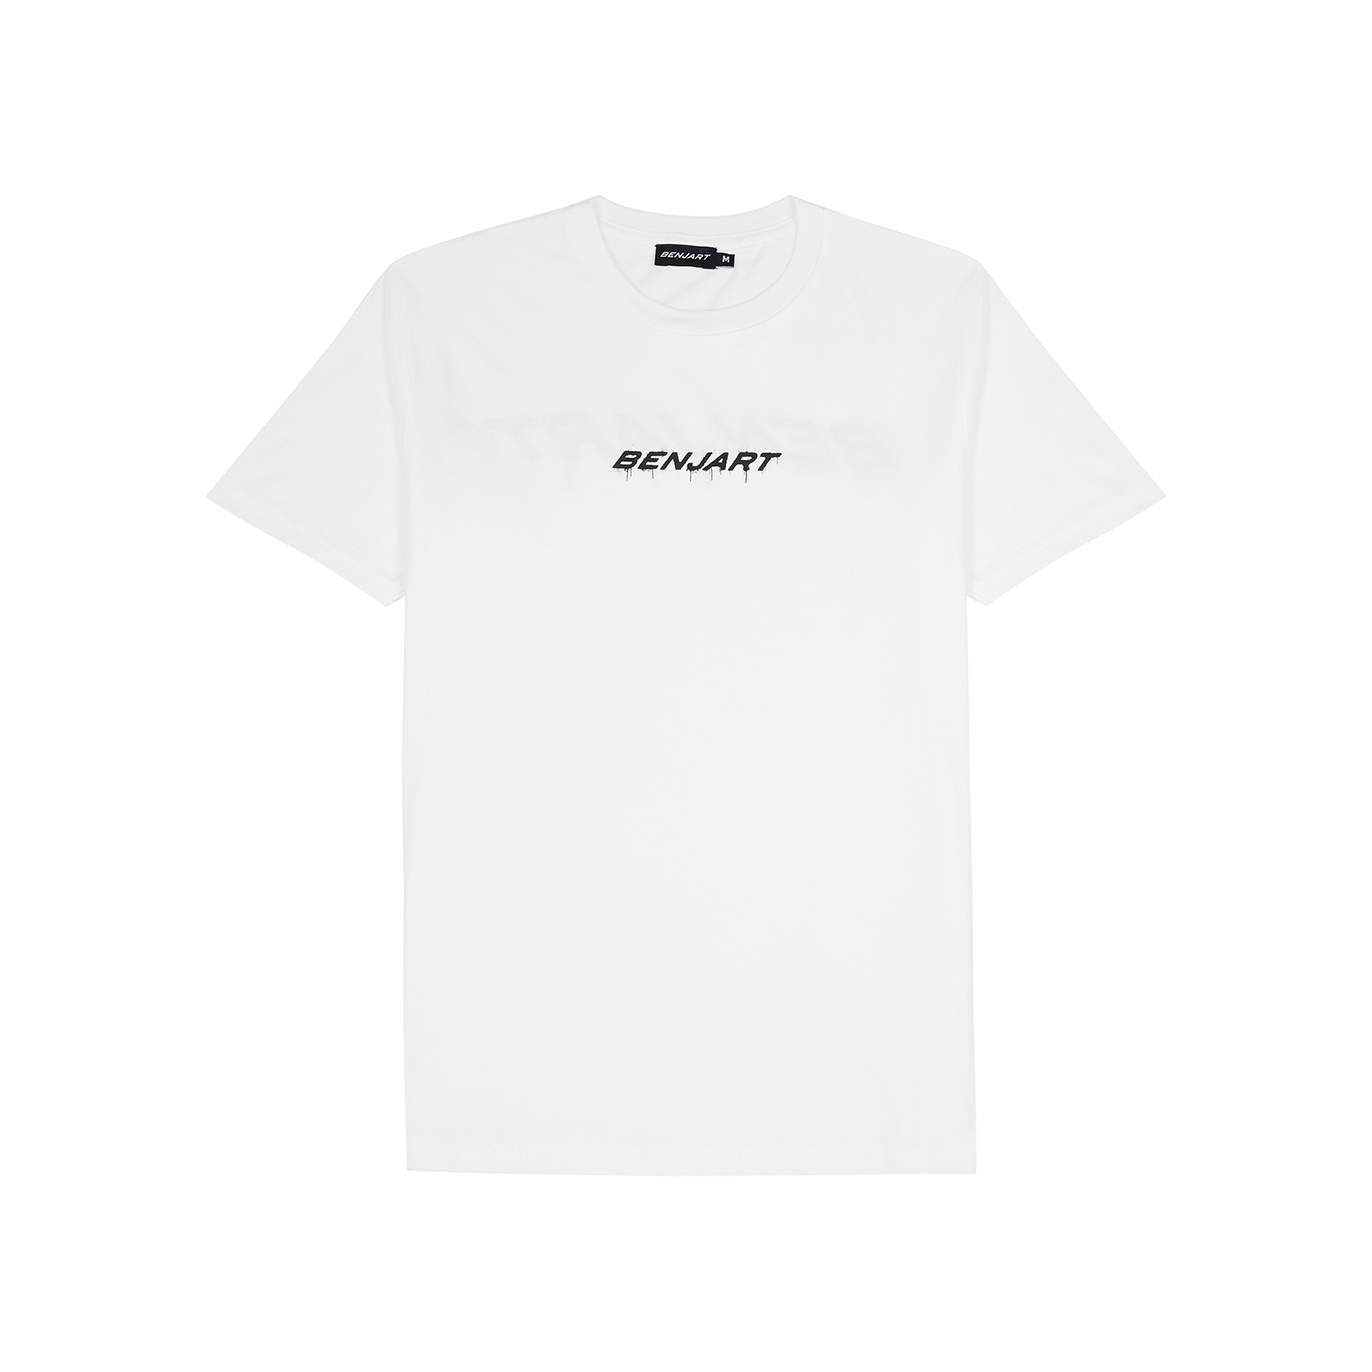 Benjart Logo Spray Cotton T-shirt - White And Black - L